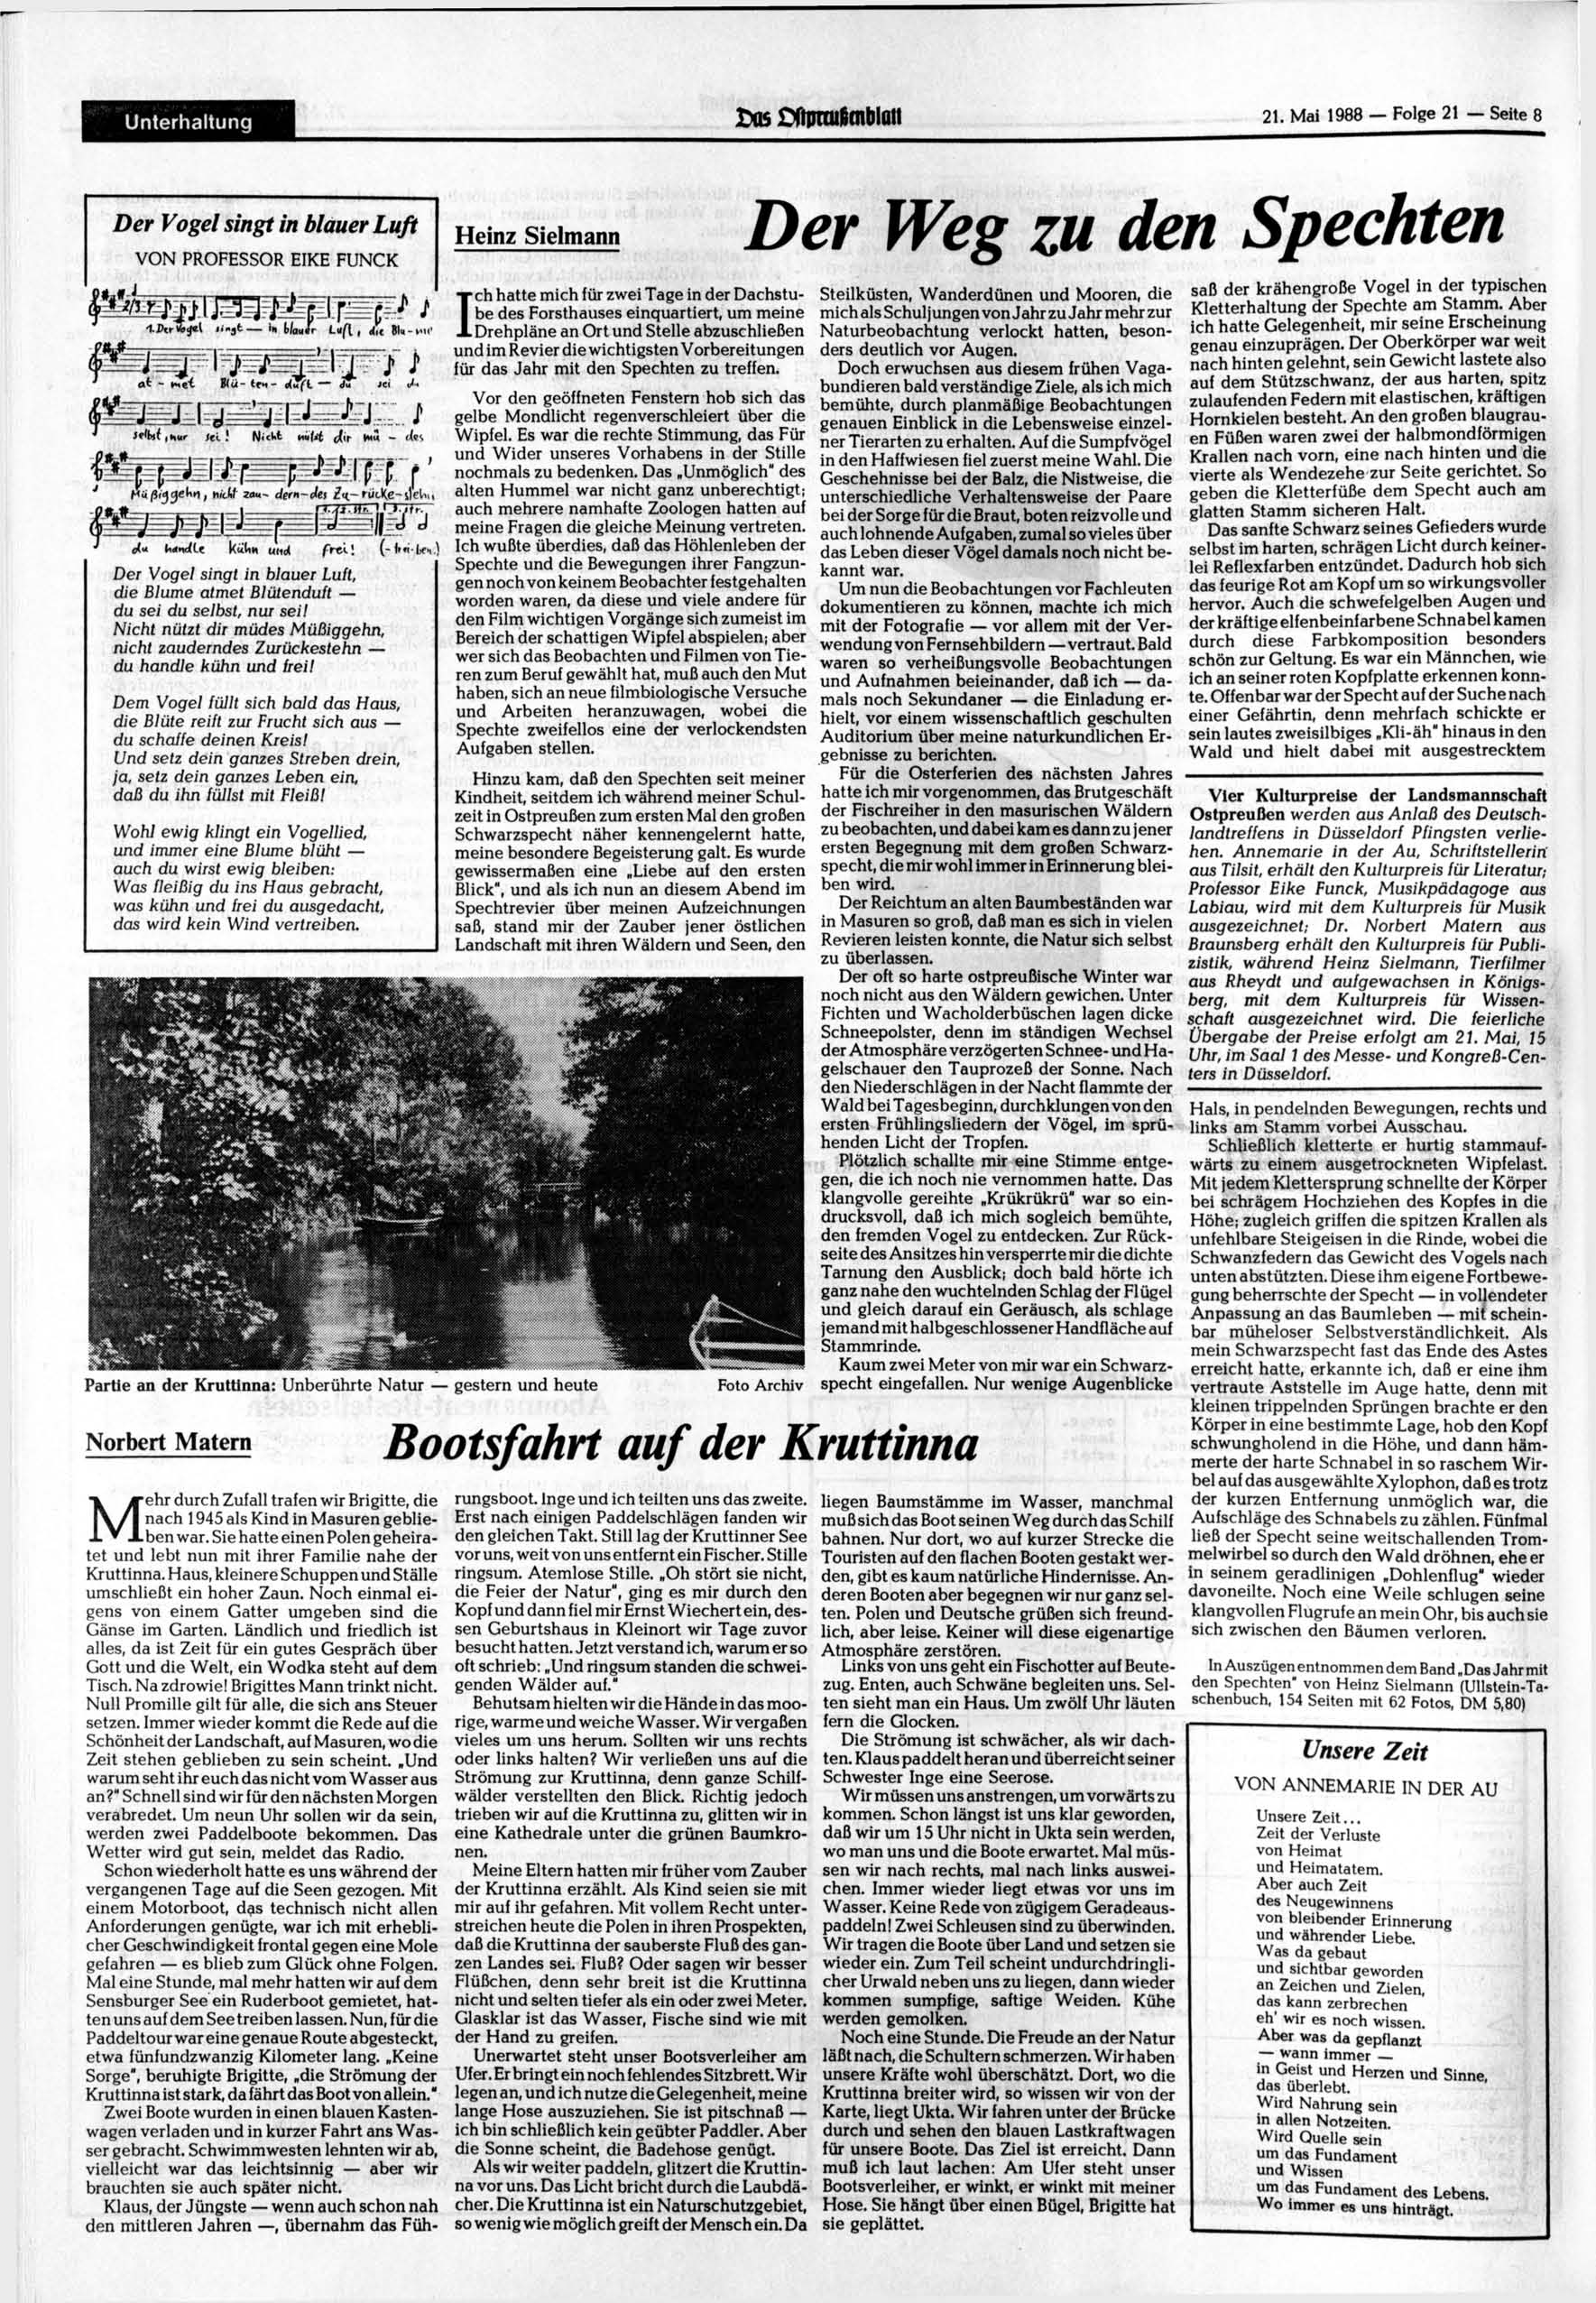 Unterhaltung as ftpraiicnblatt 21.